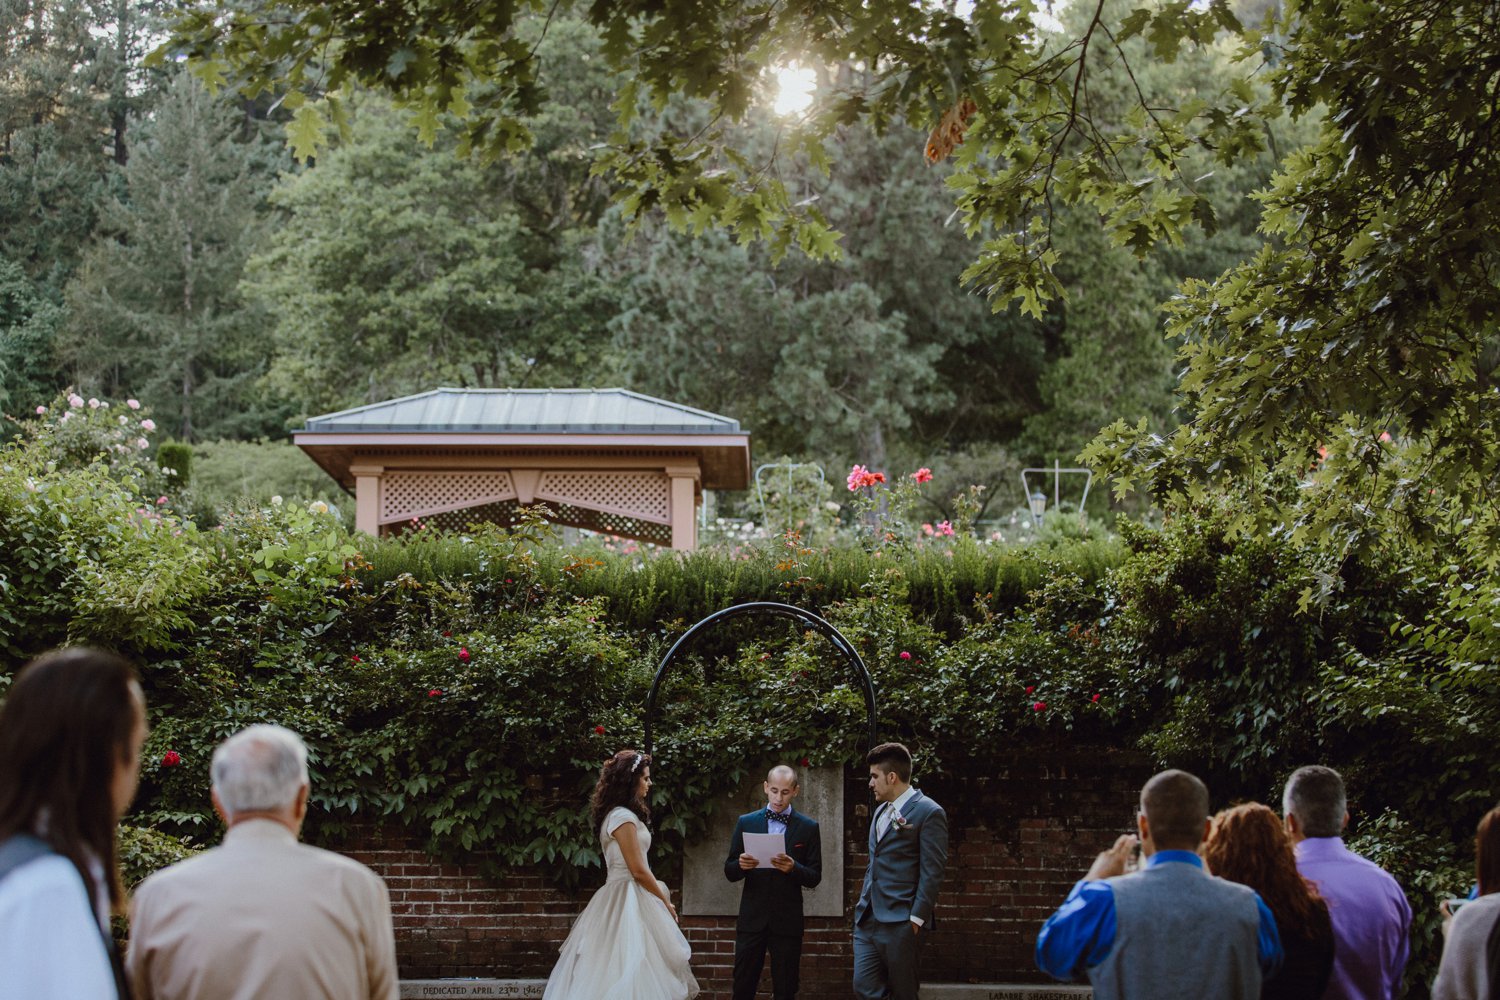 Wedding ceremony at Portland's Rose Garden in Washington Park